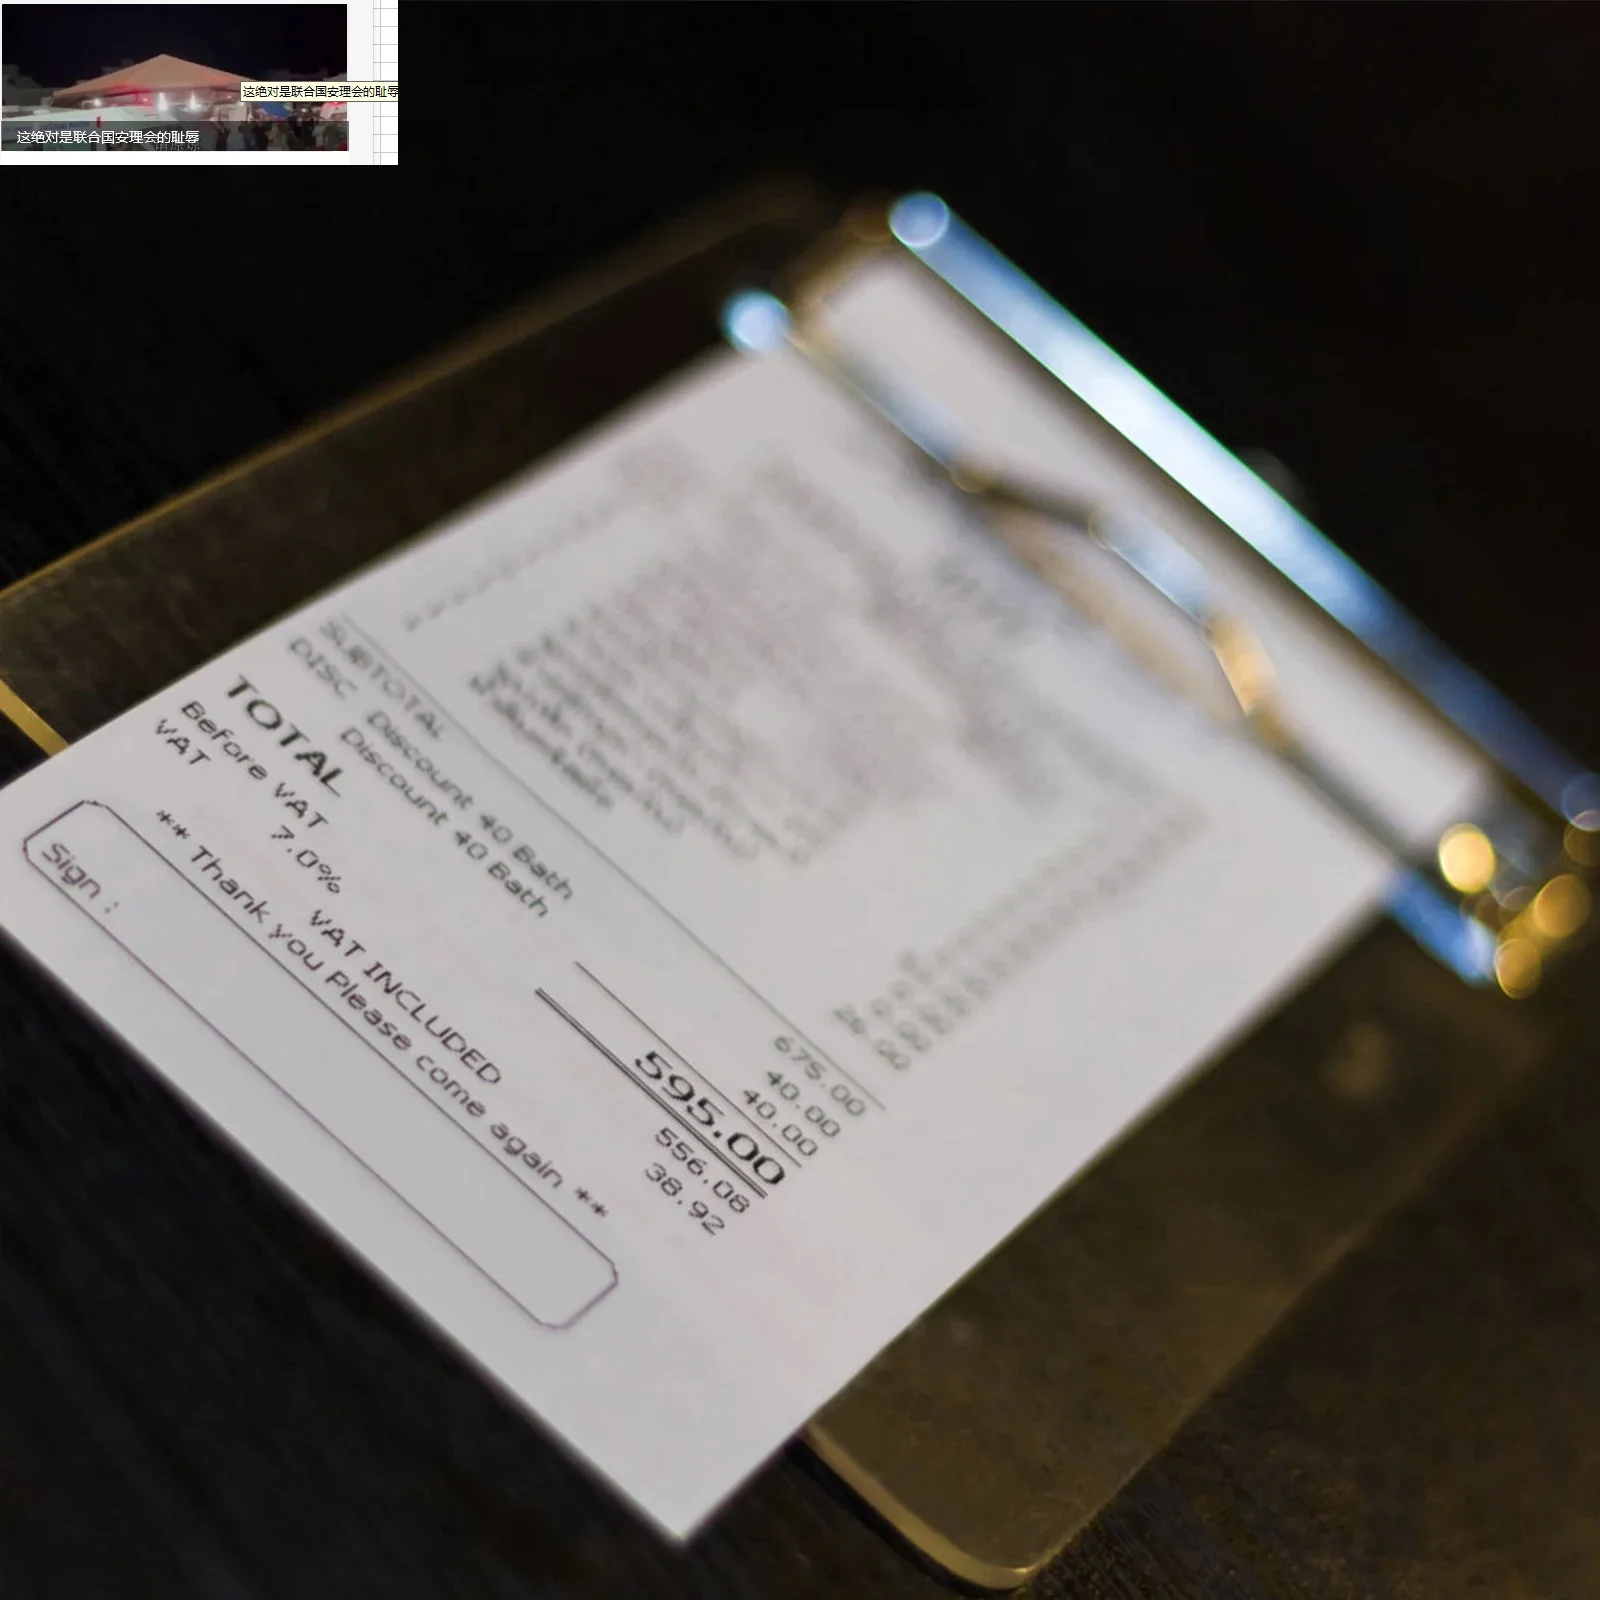 80x60mm Thermal Paper Receipt Bill Paper for 80mm Cash Register Printer Supermarket Shop Restaurant Thermal Credit Card Paper